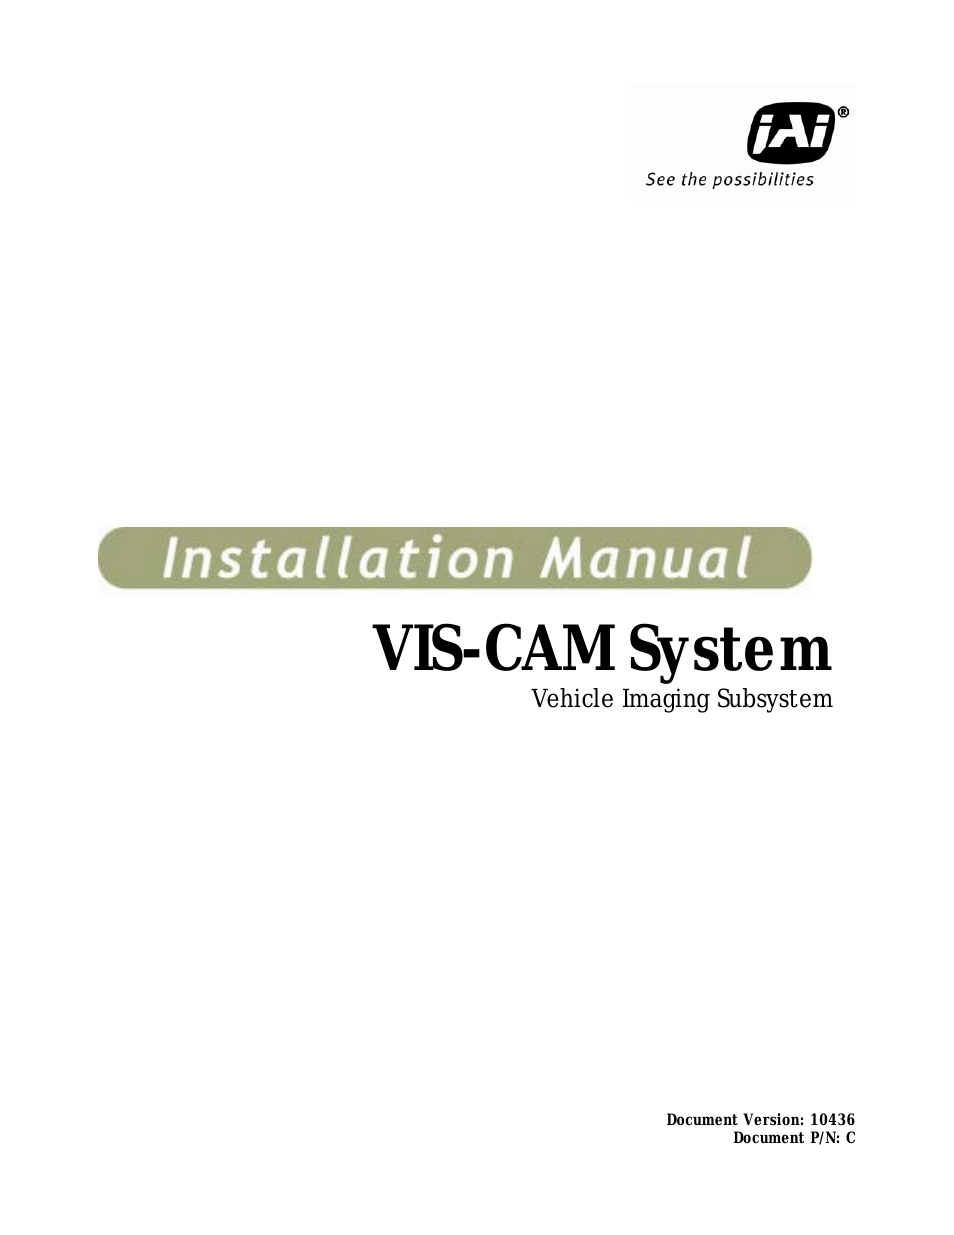 VIS-CAM System TS-9720EN